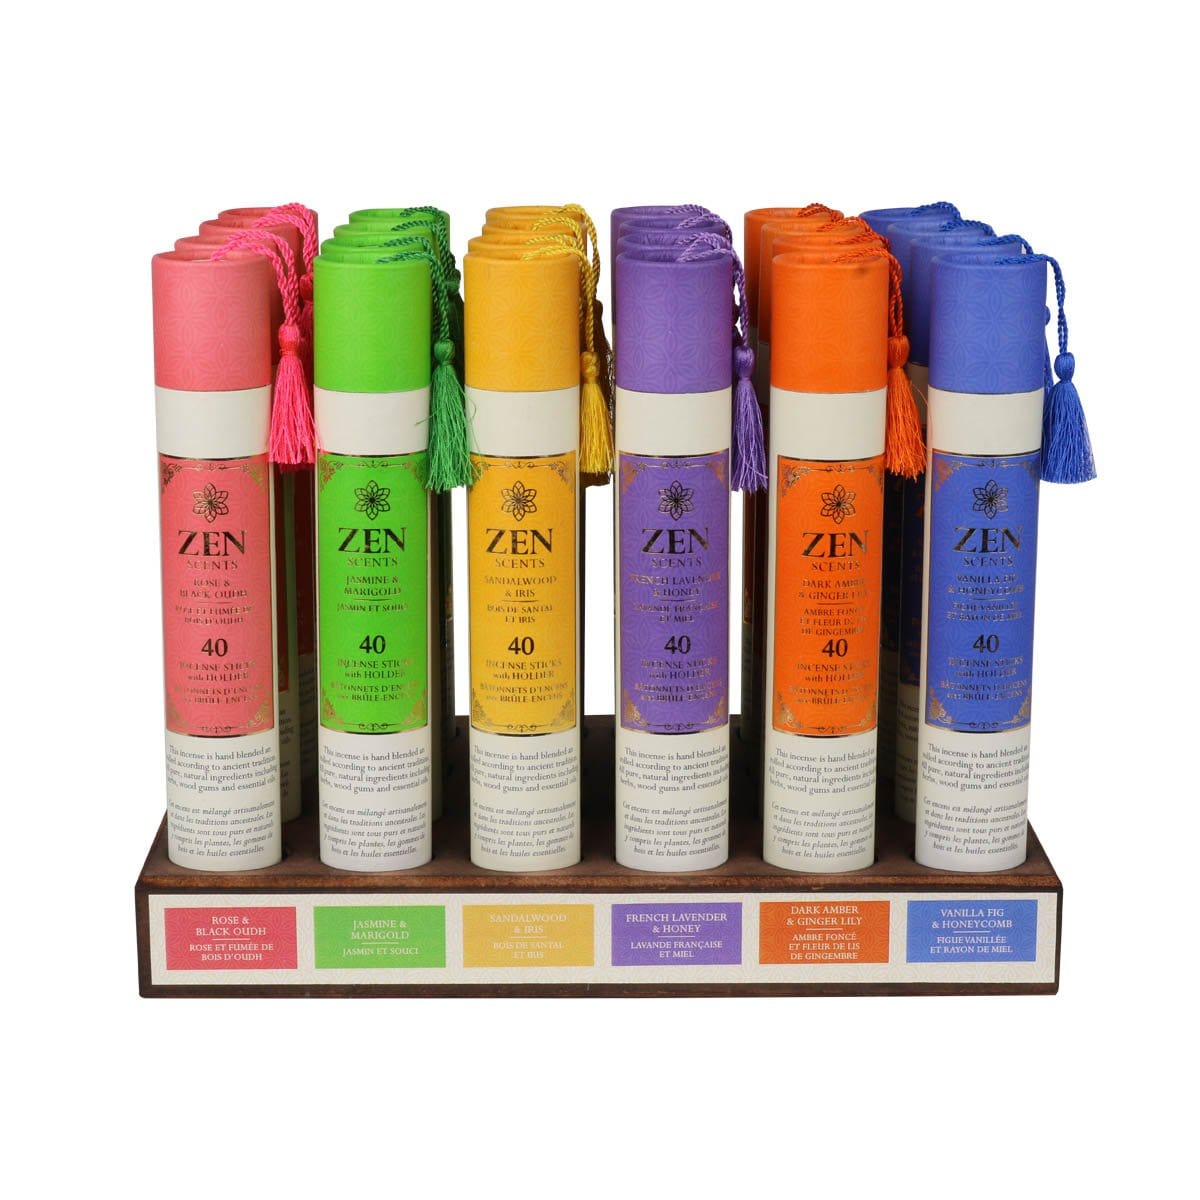 Zen Scents Incense Sticks displayer